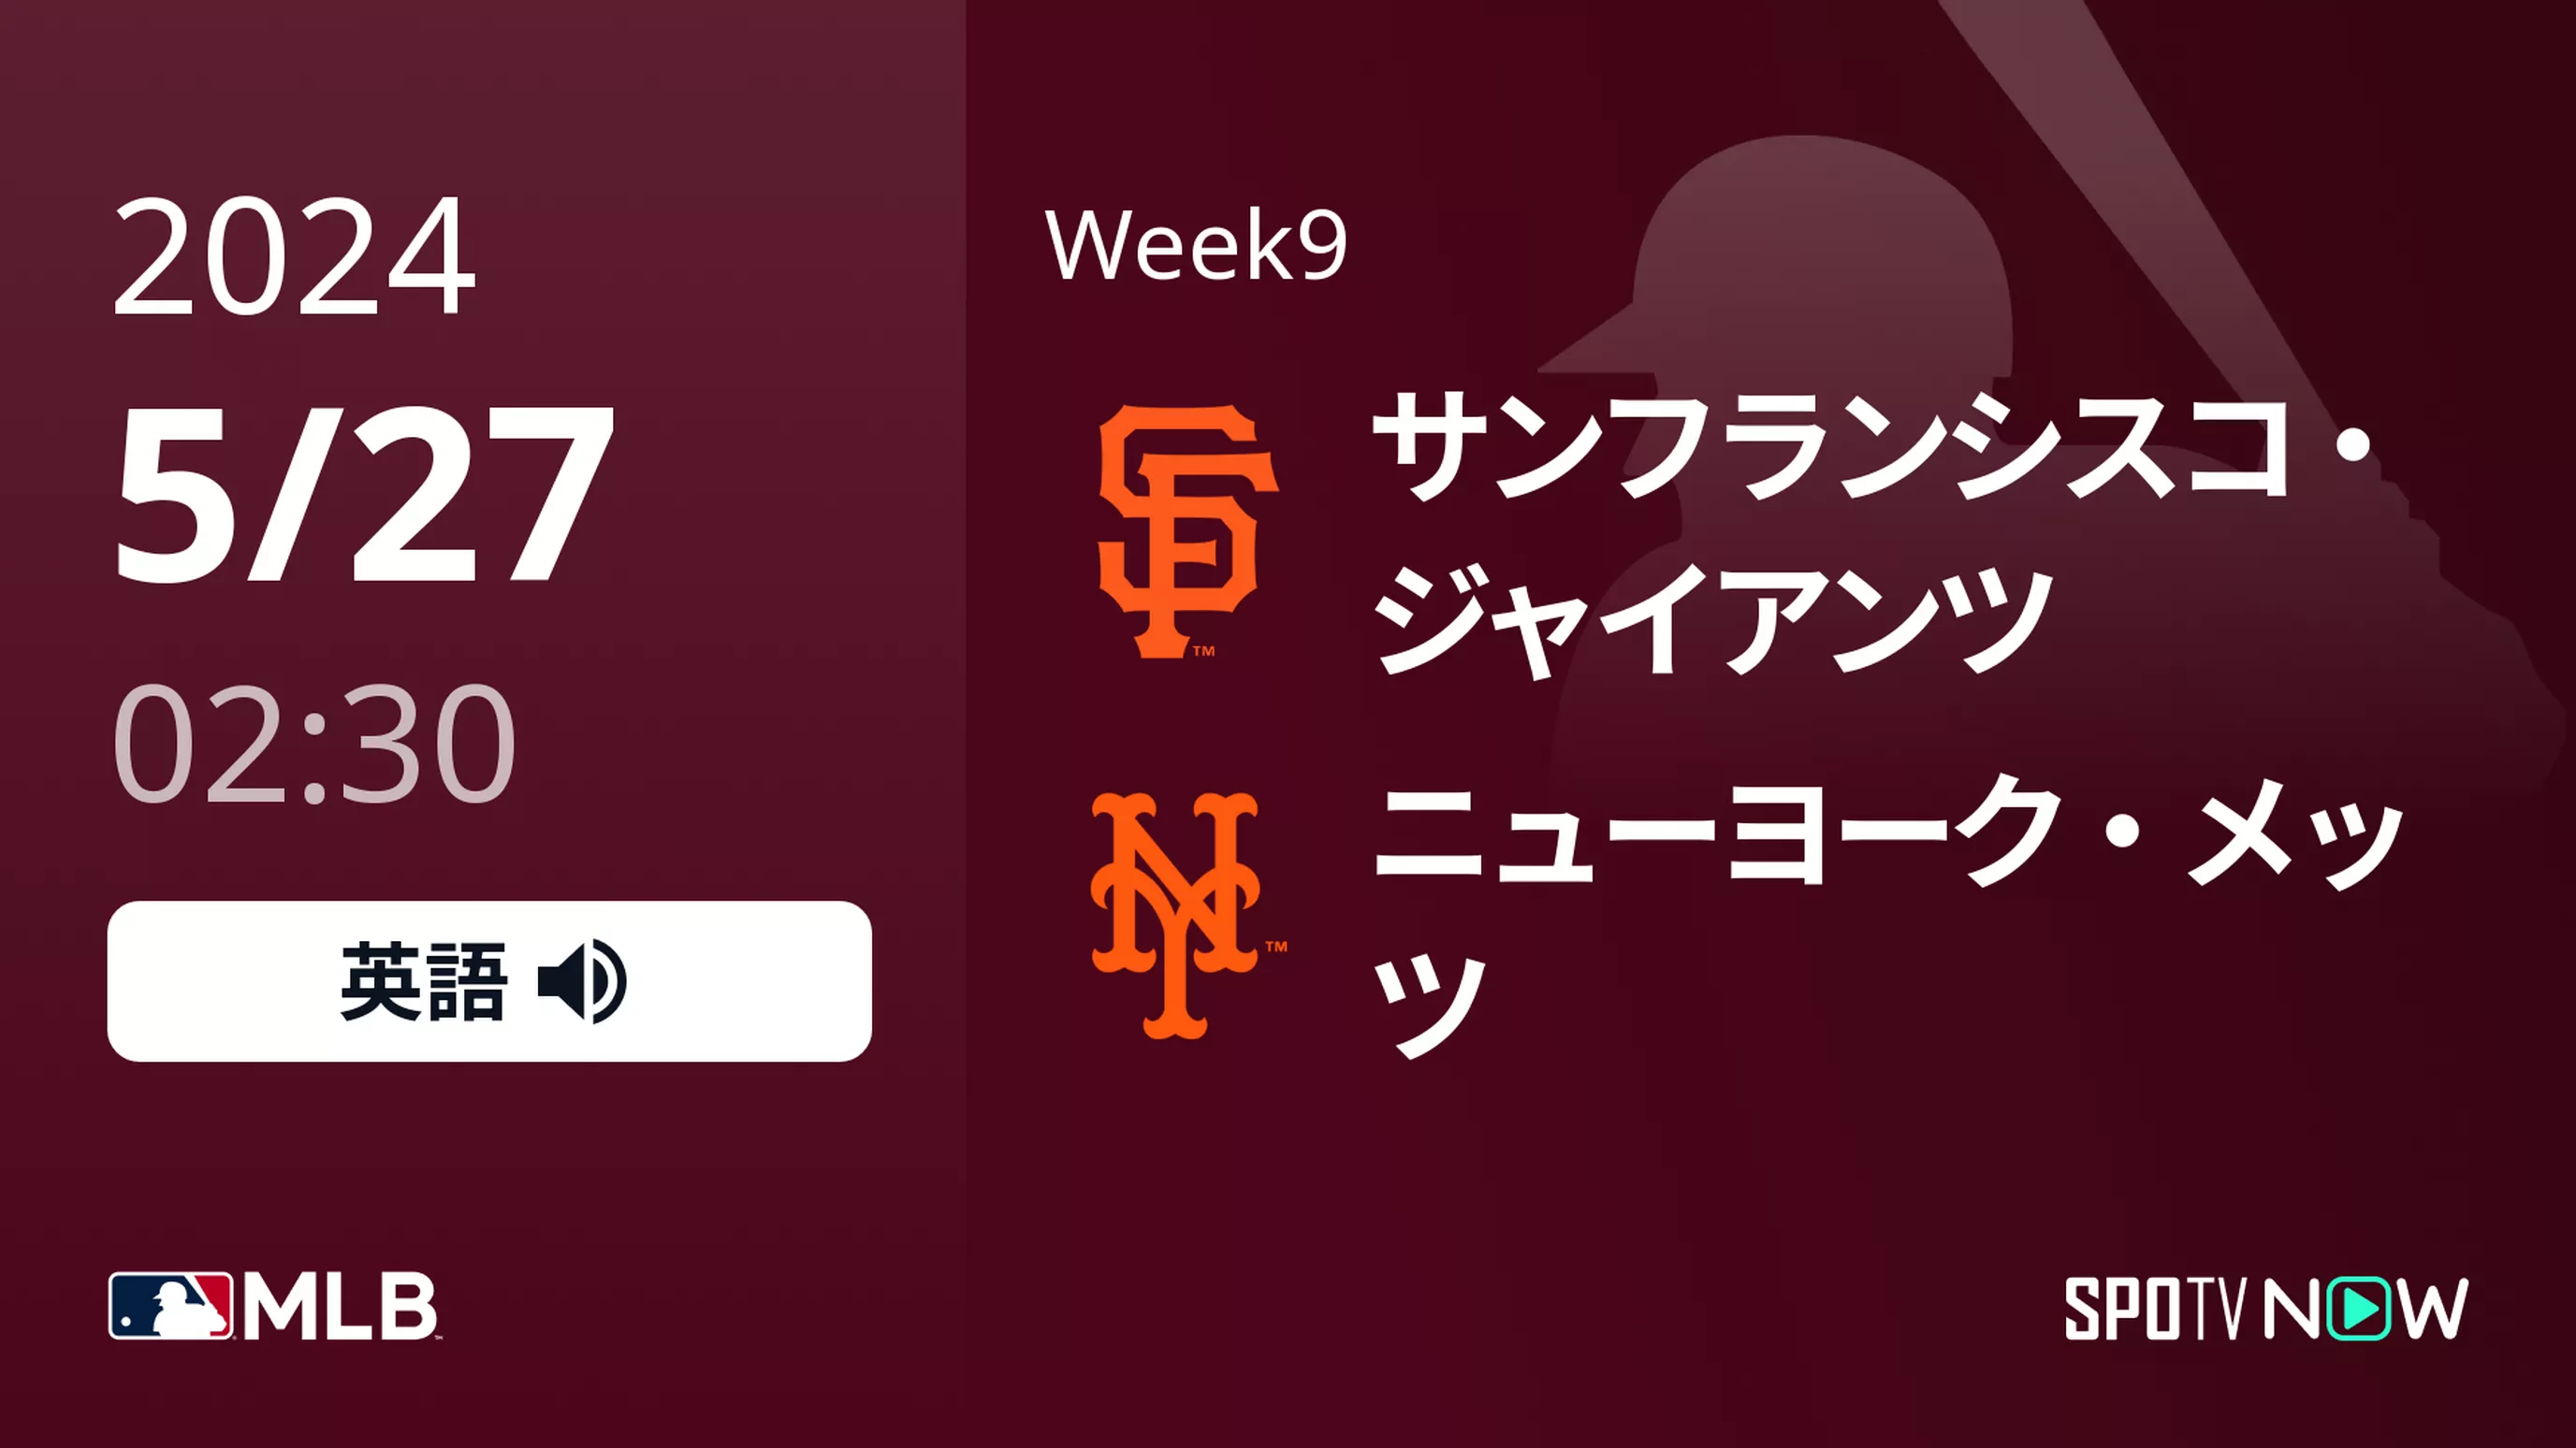 Week9 ジャイアンツ vs メッツ 5/27[MLB]